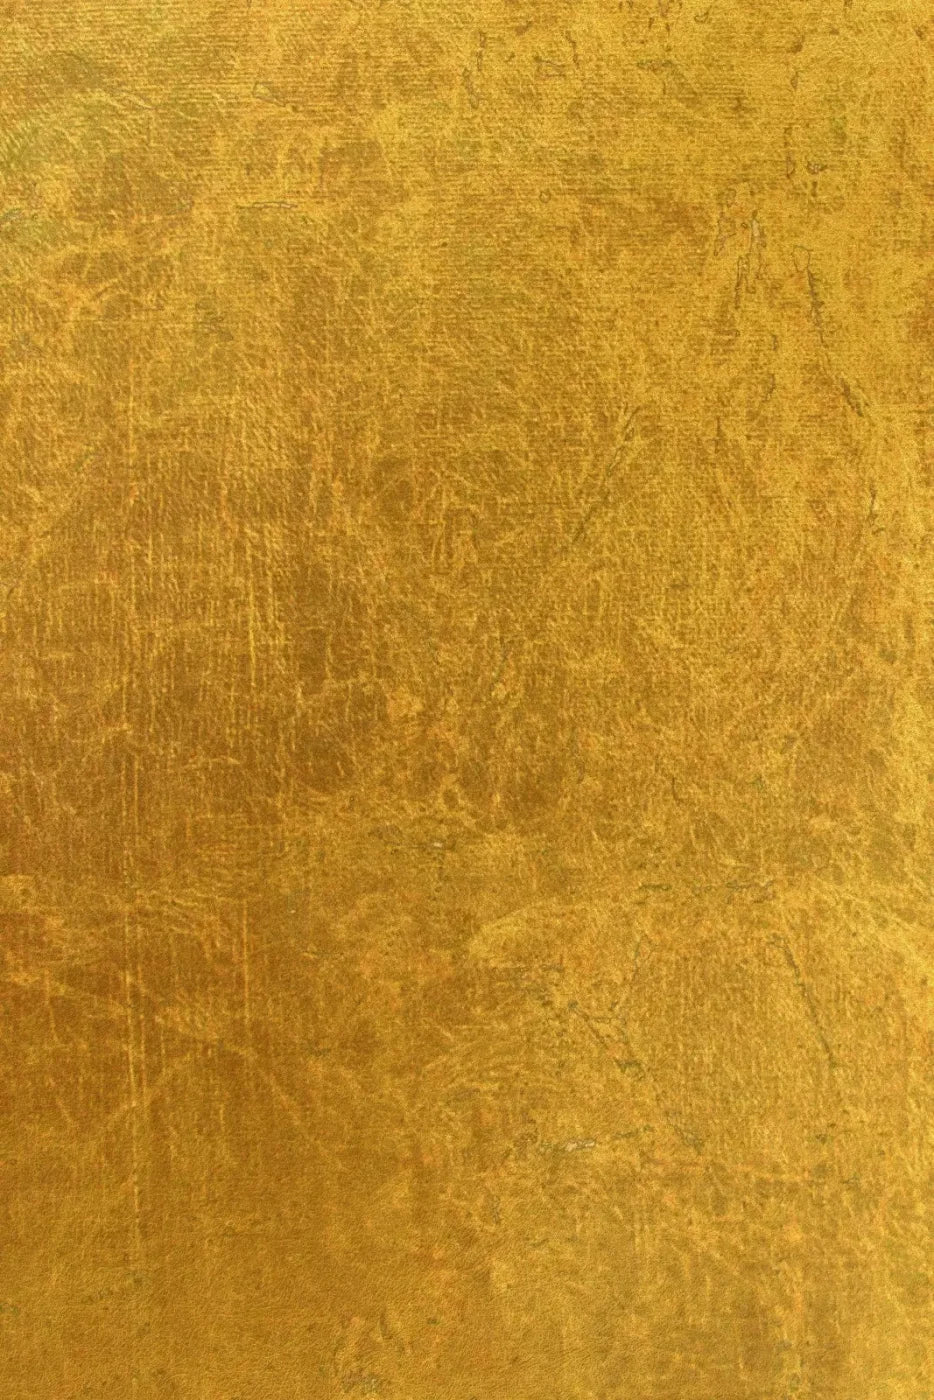 Gold Foil Backdrop